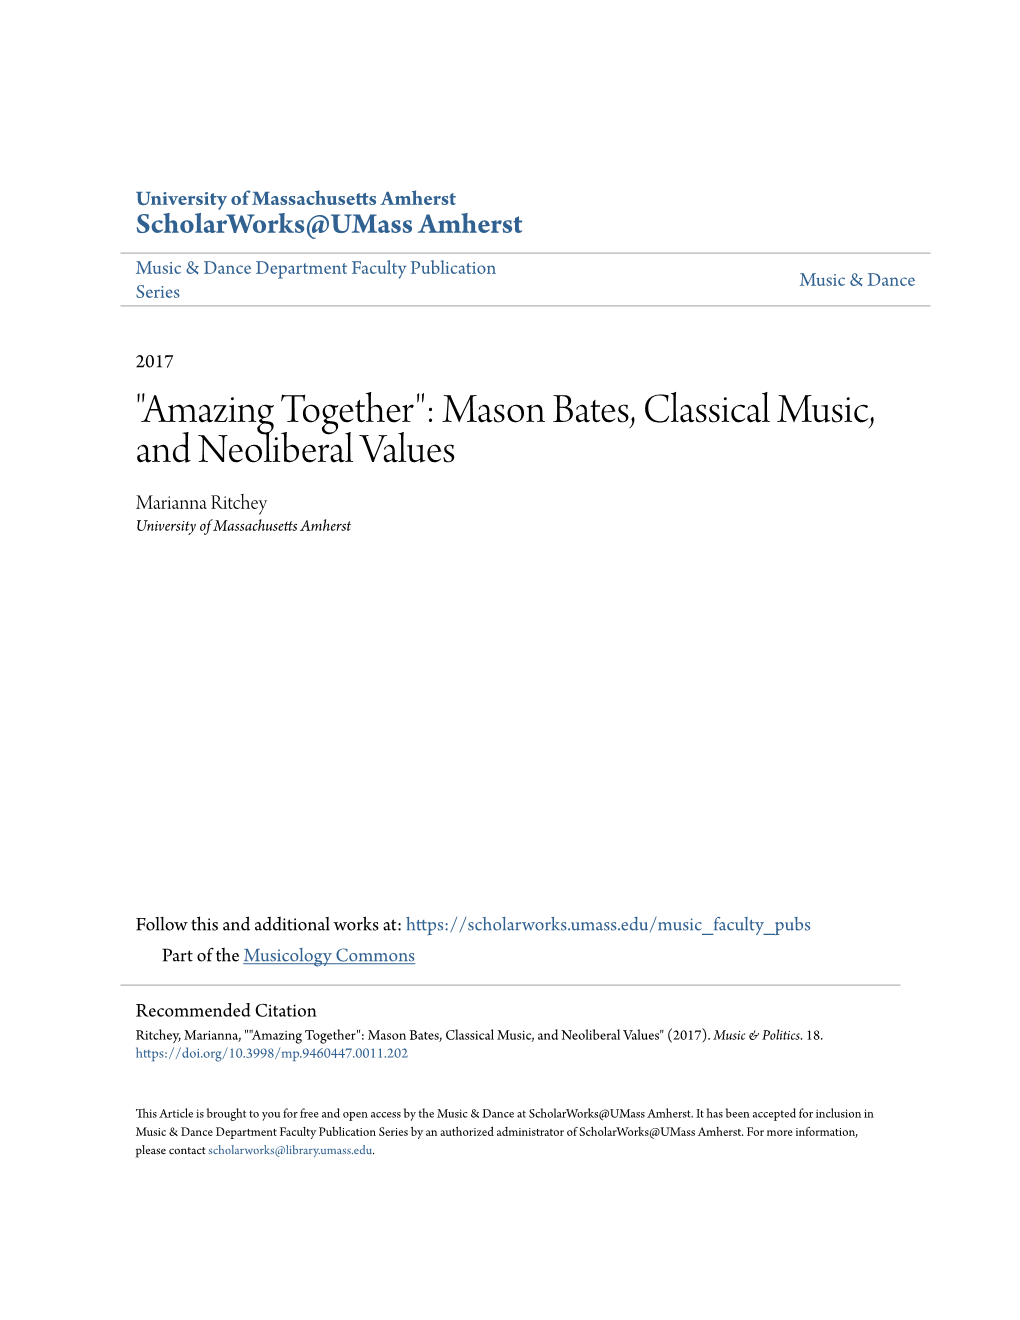 Mason Bates, Classical Music, and Neoliberal Values Marianna Ritchey University of Massachusetts Amherst